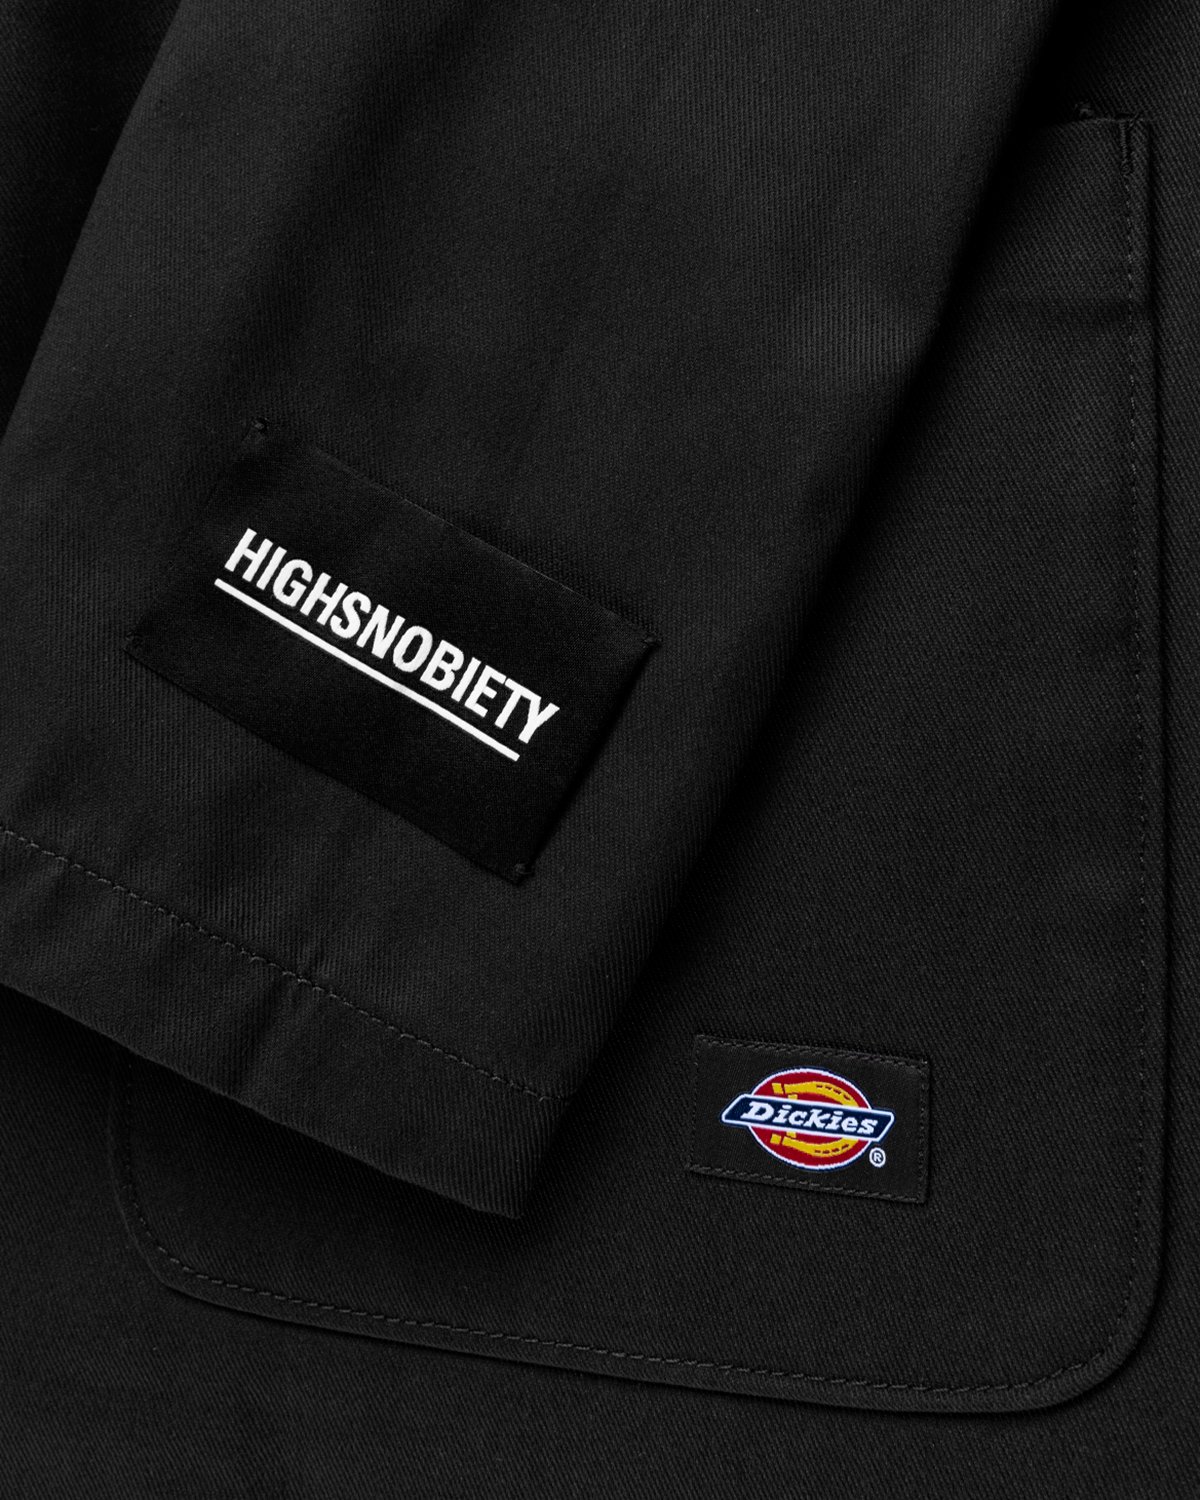 Highsnobiety x Dickies - Blazer Black - Clothing - Black - Image 3